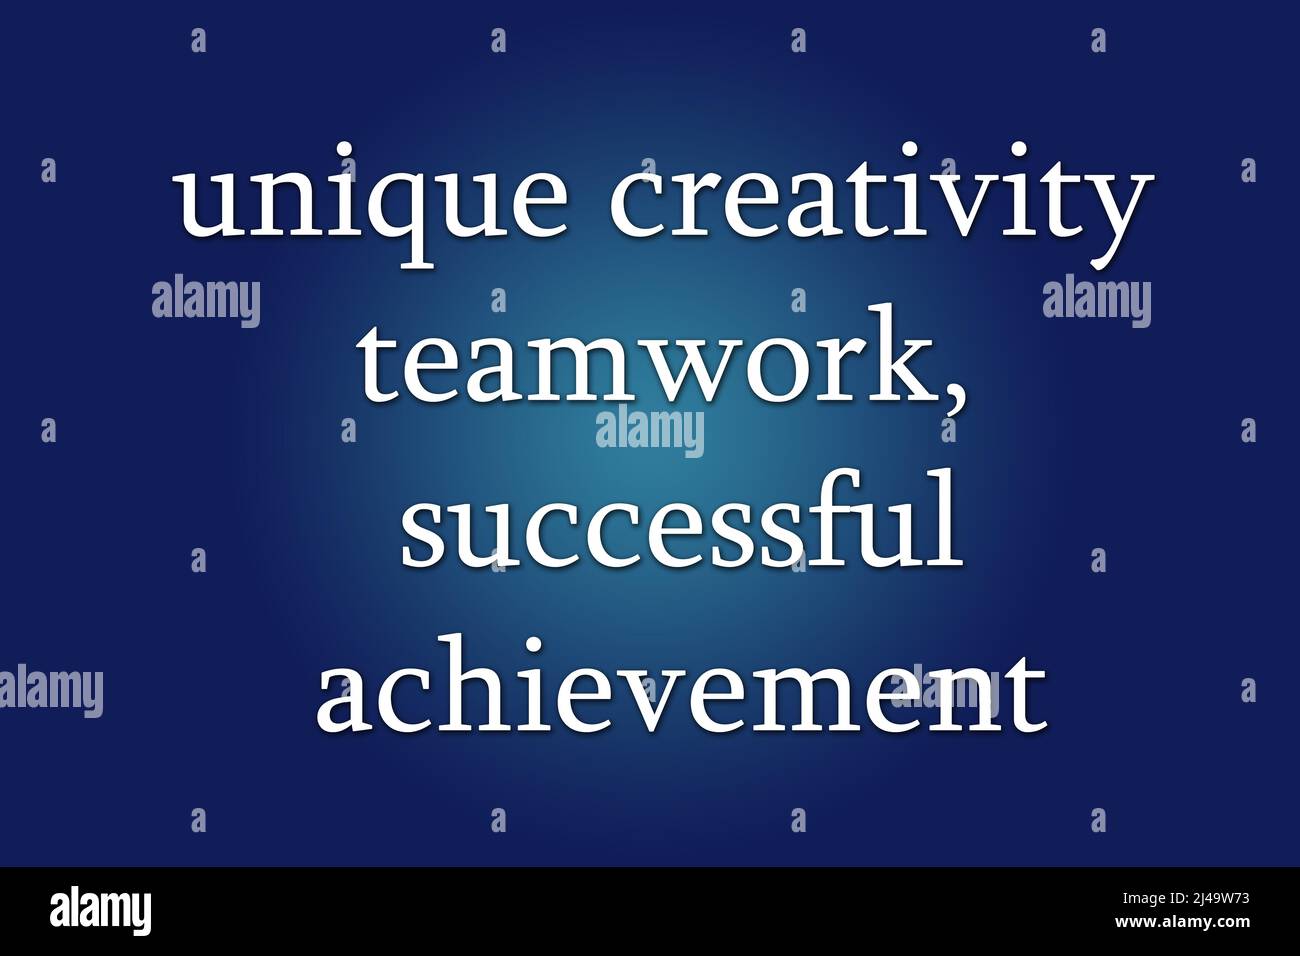 unique creativity teamwork, successful achievement. text. with blue gradient background Stock Photo